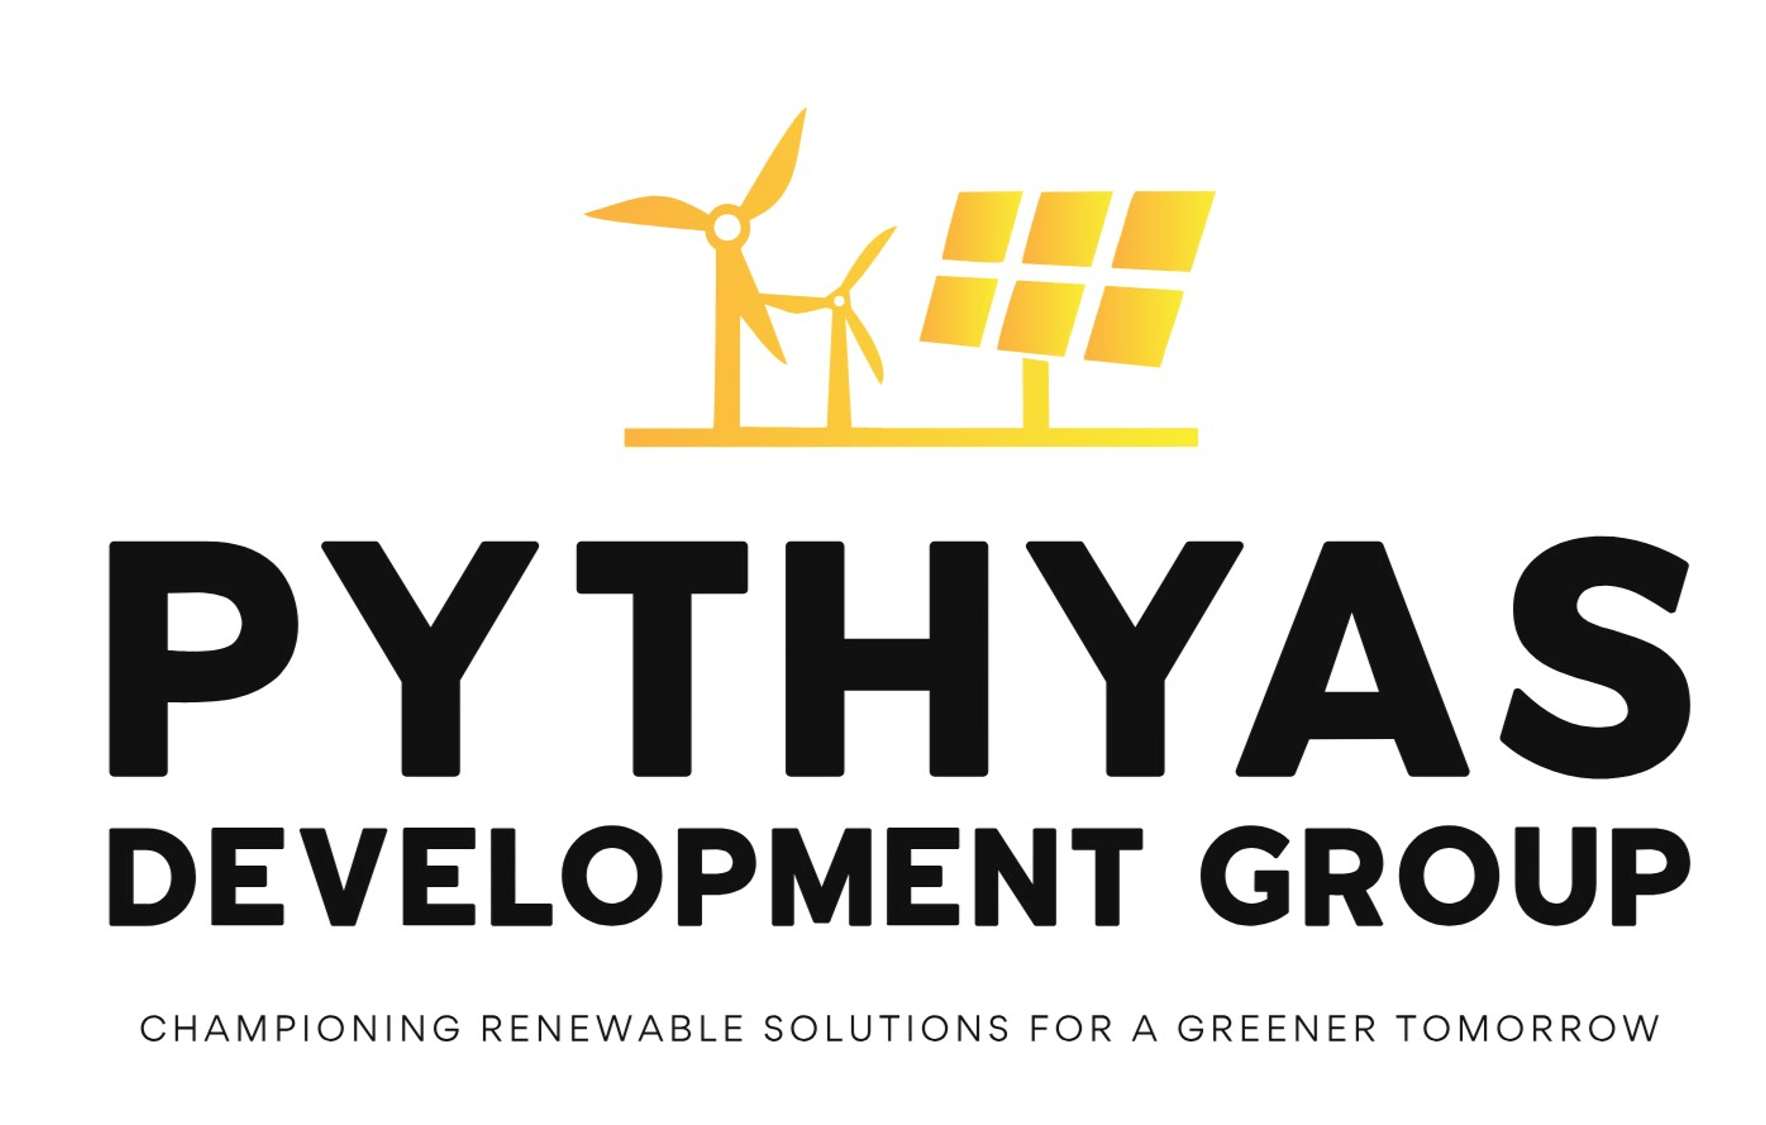 PYTHYAS DEVELOPMENT GROUP